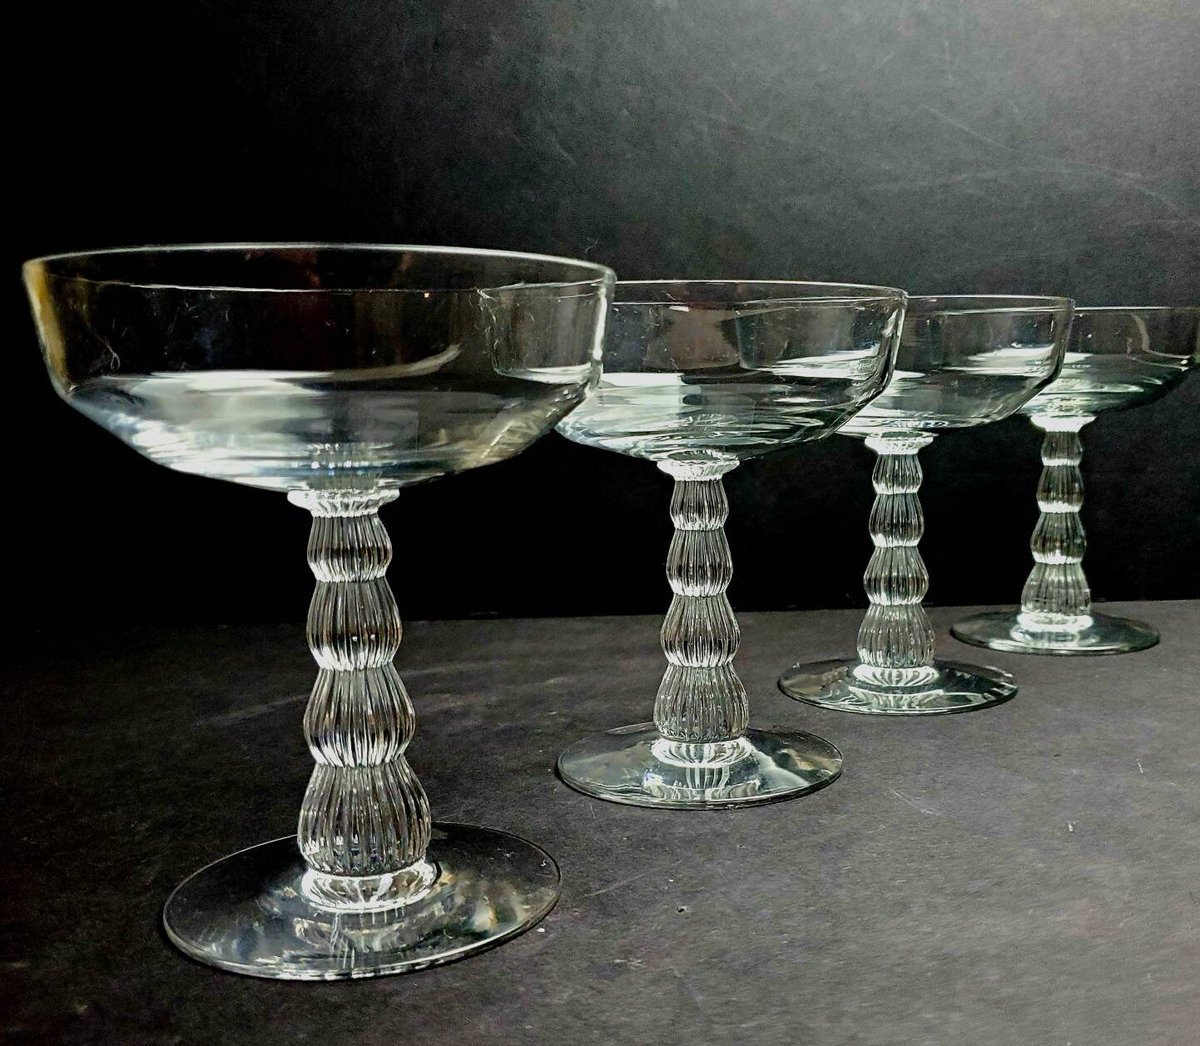 Share some bubbly cheer! aycarambagifts.etsy.com/listing/127312…
#champagne #vintagebar #merryandbright